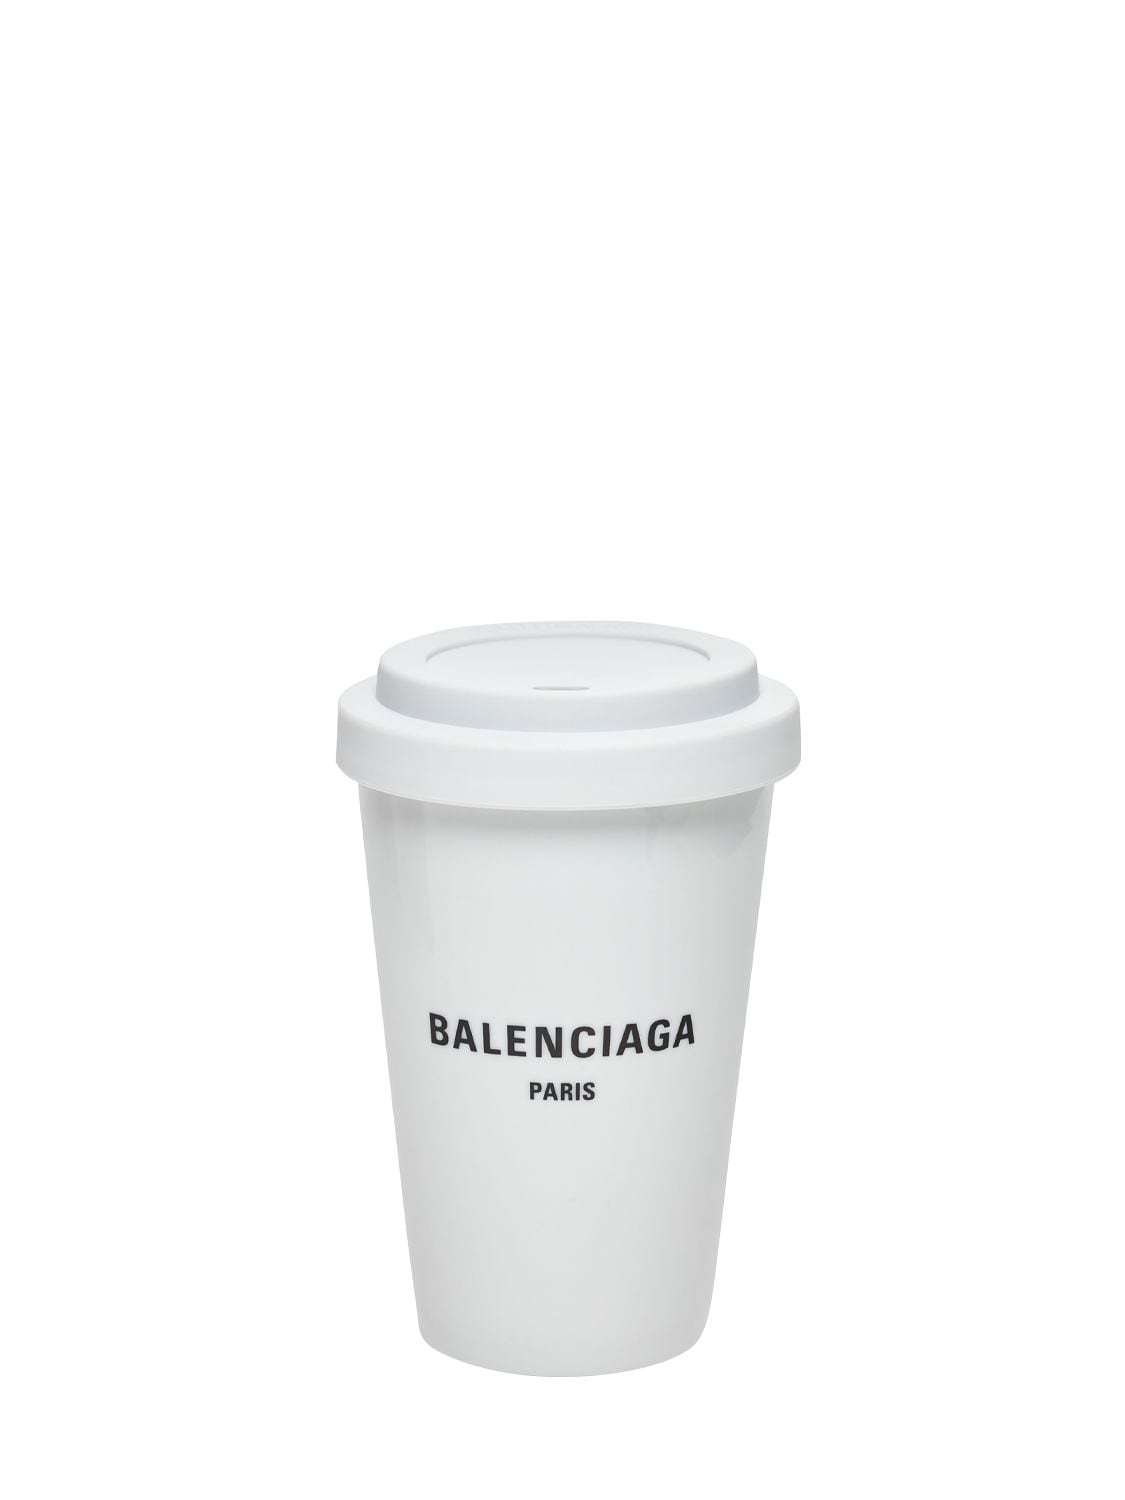 Balenciaga Paris陶瓷咖啡杯 In White